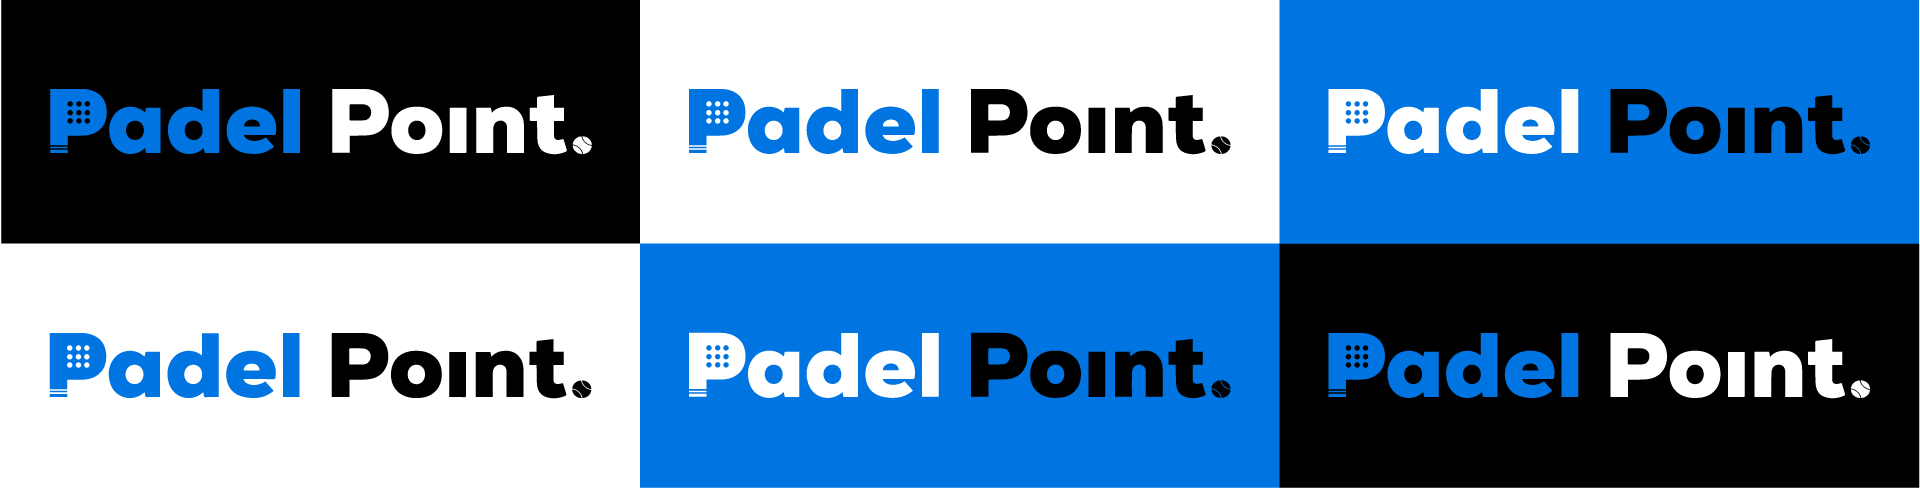 Padel Point | Identity Creation on Behance